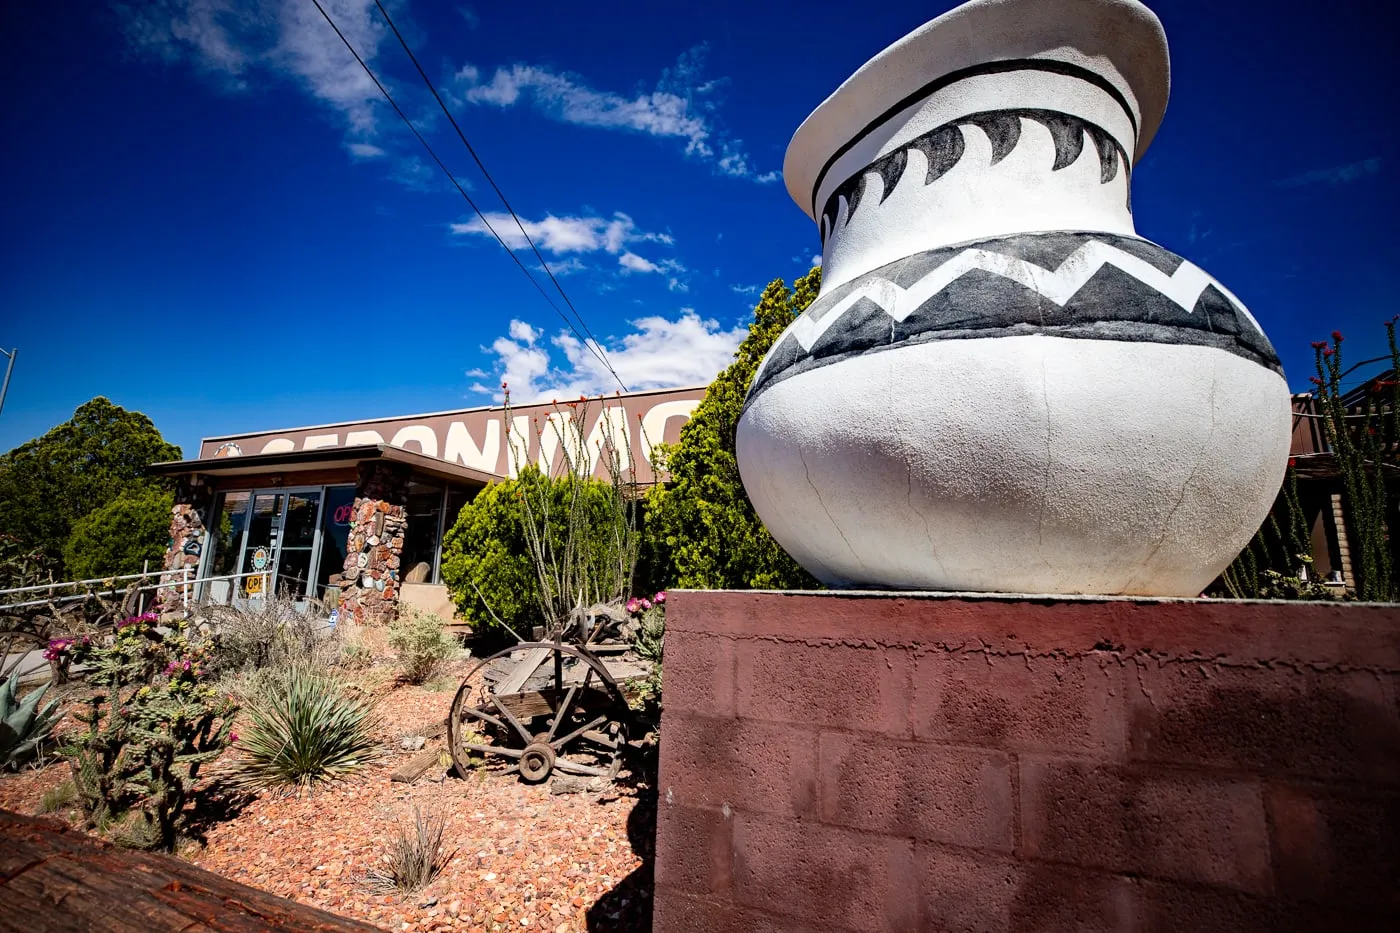 Geronimo Trading Post in Joseph City, Arizona on Route 66 - World's Largest Petrified Tree